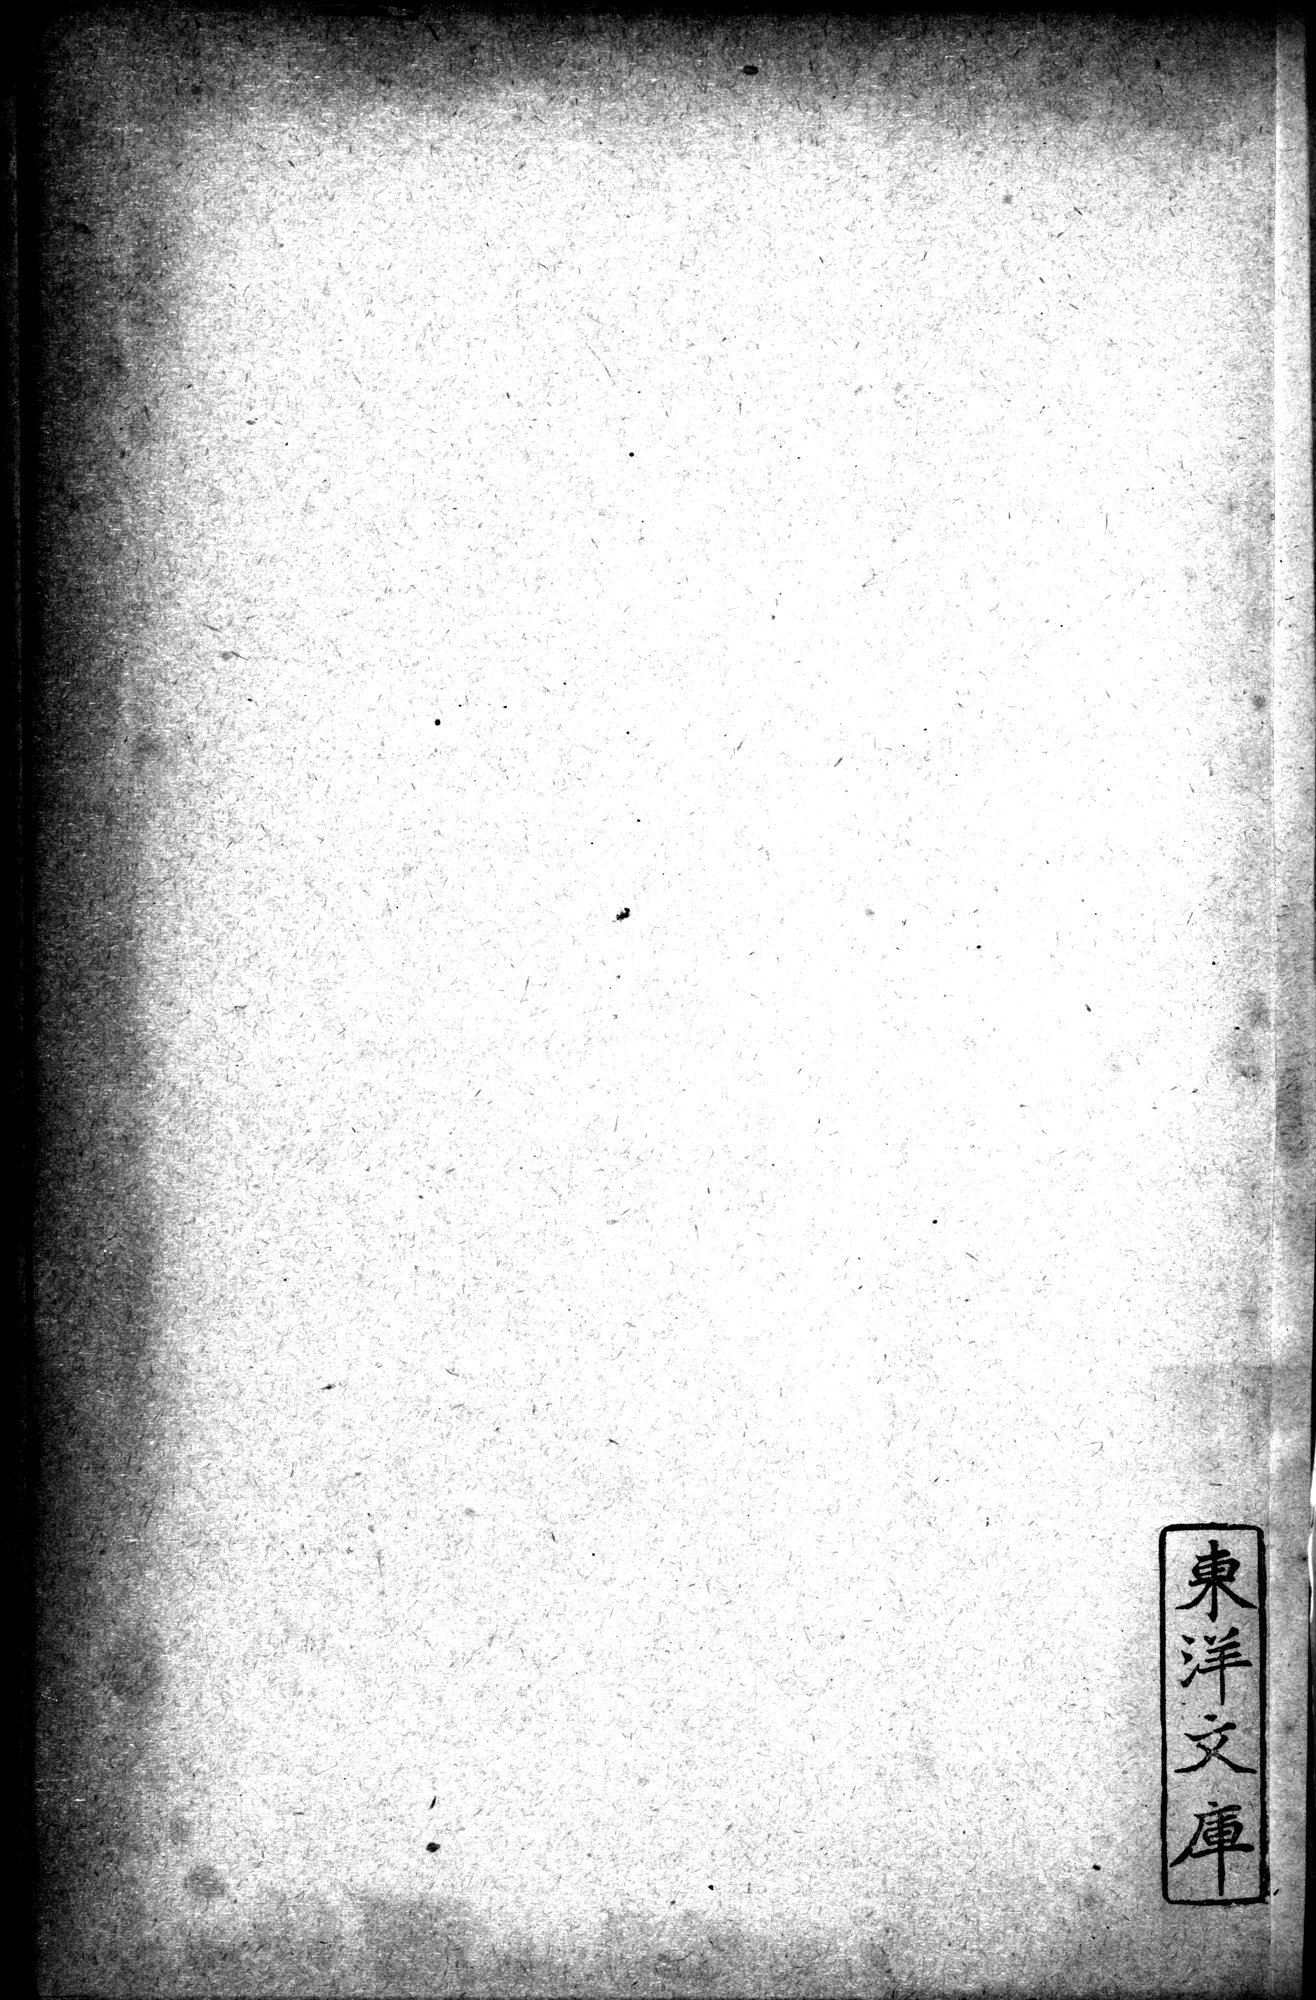 Mongoliya i Amdo i mertby gorod Khara-Khoto : vol.1 / Page 770 (Grayscale High Resolution Image)